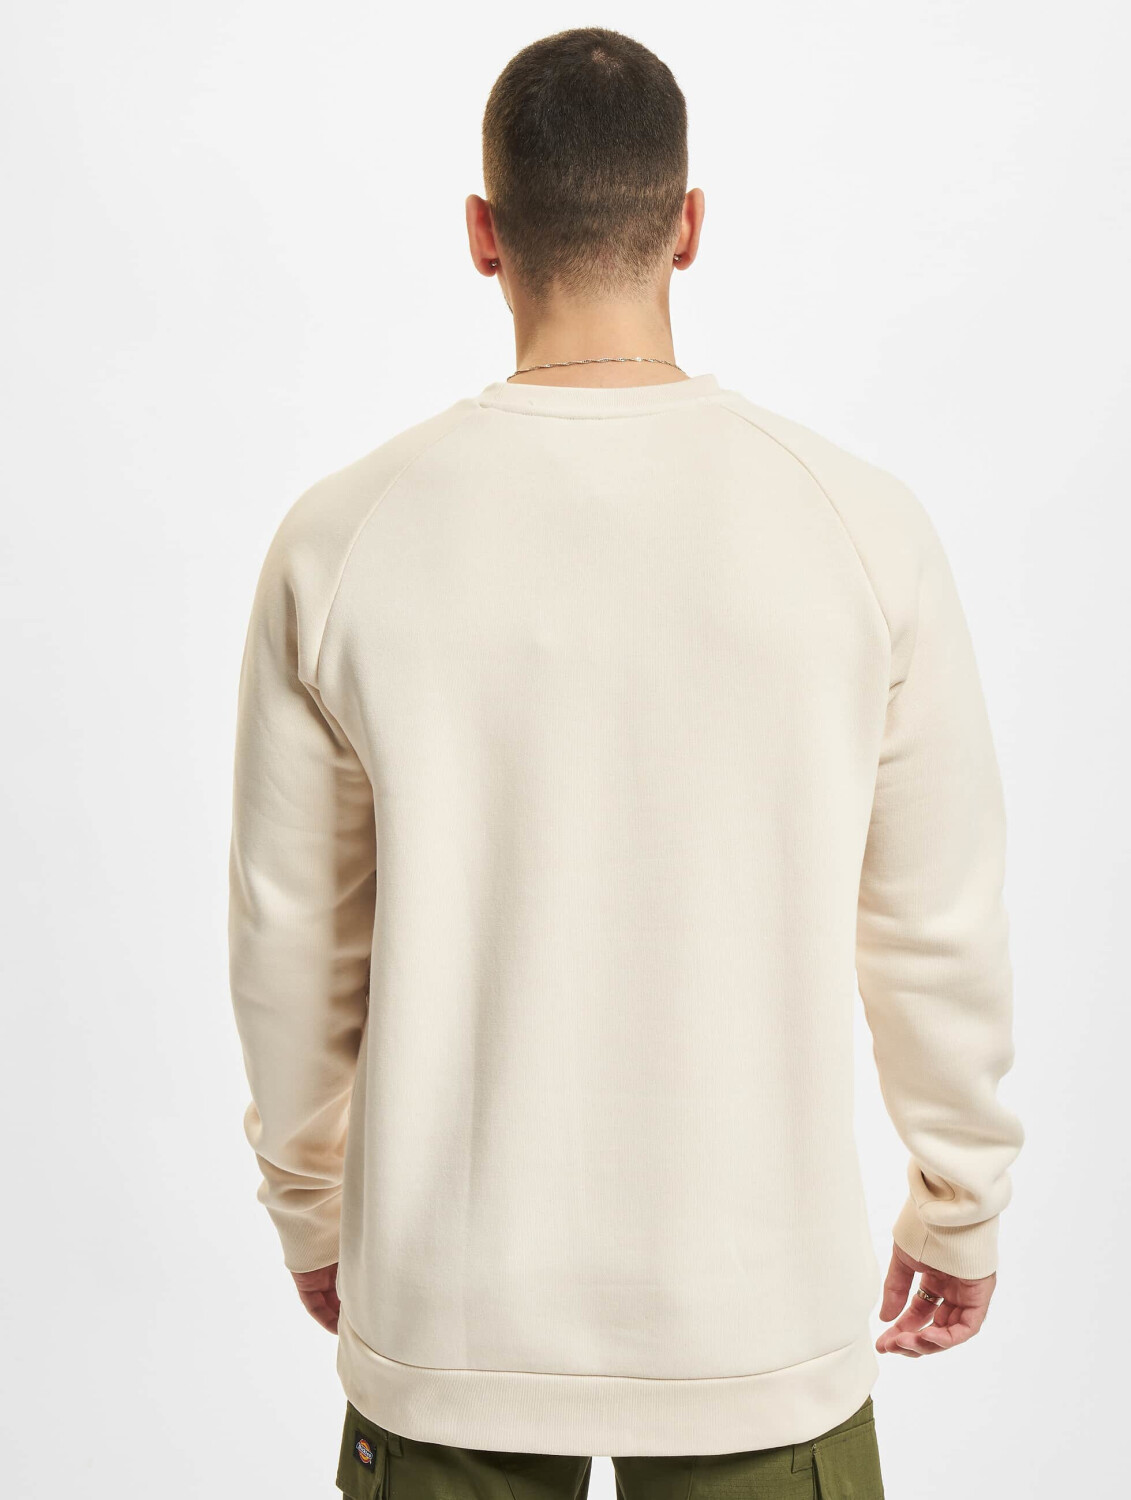 Originals Crewneck bei Essentials Adicolor wonder | Sweatshirt 46,95 Preisvergleich (HE9428) white € Adidas ab Trefoil